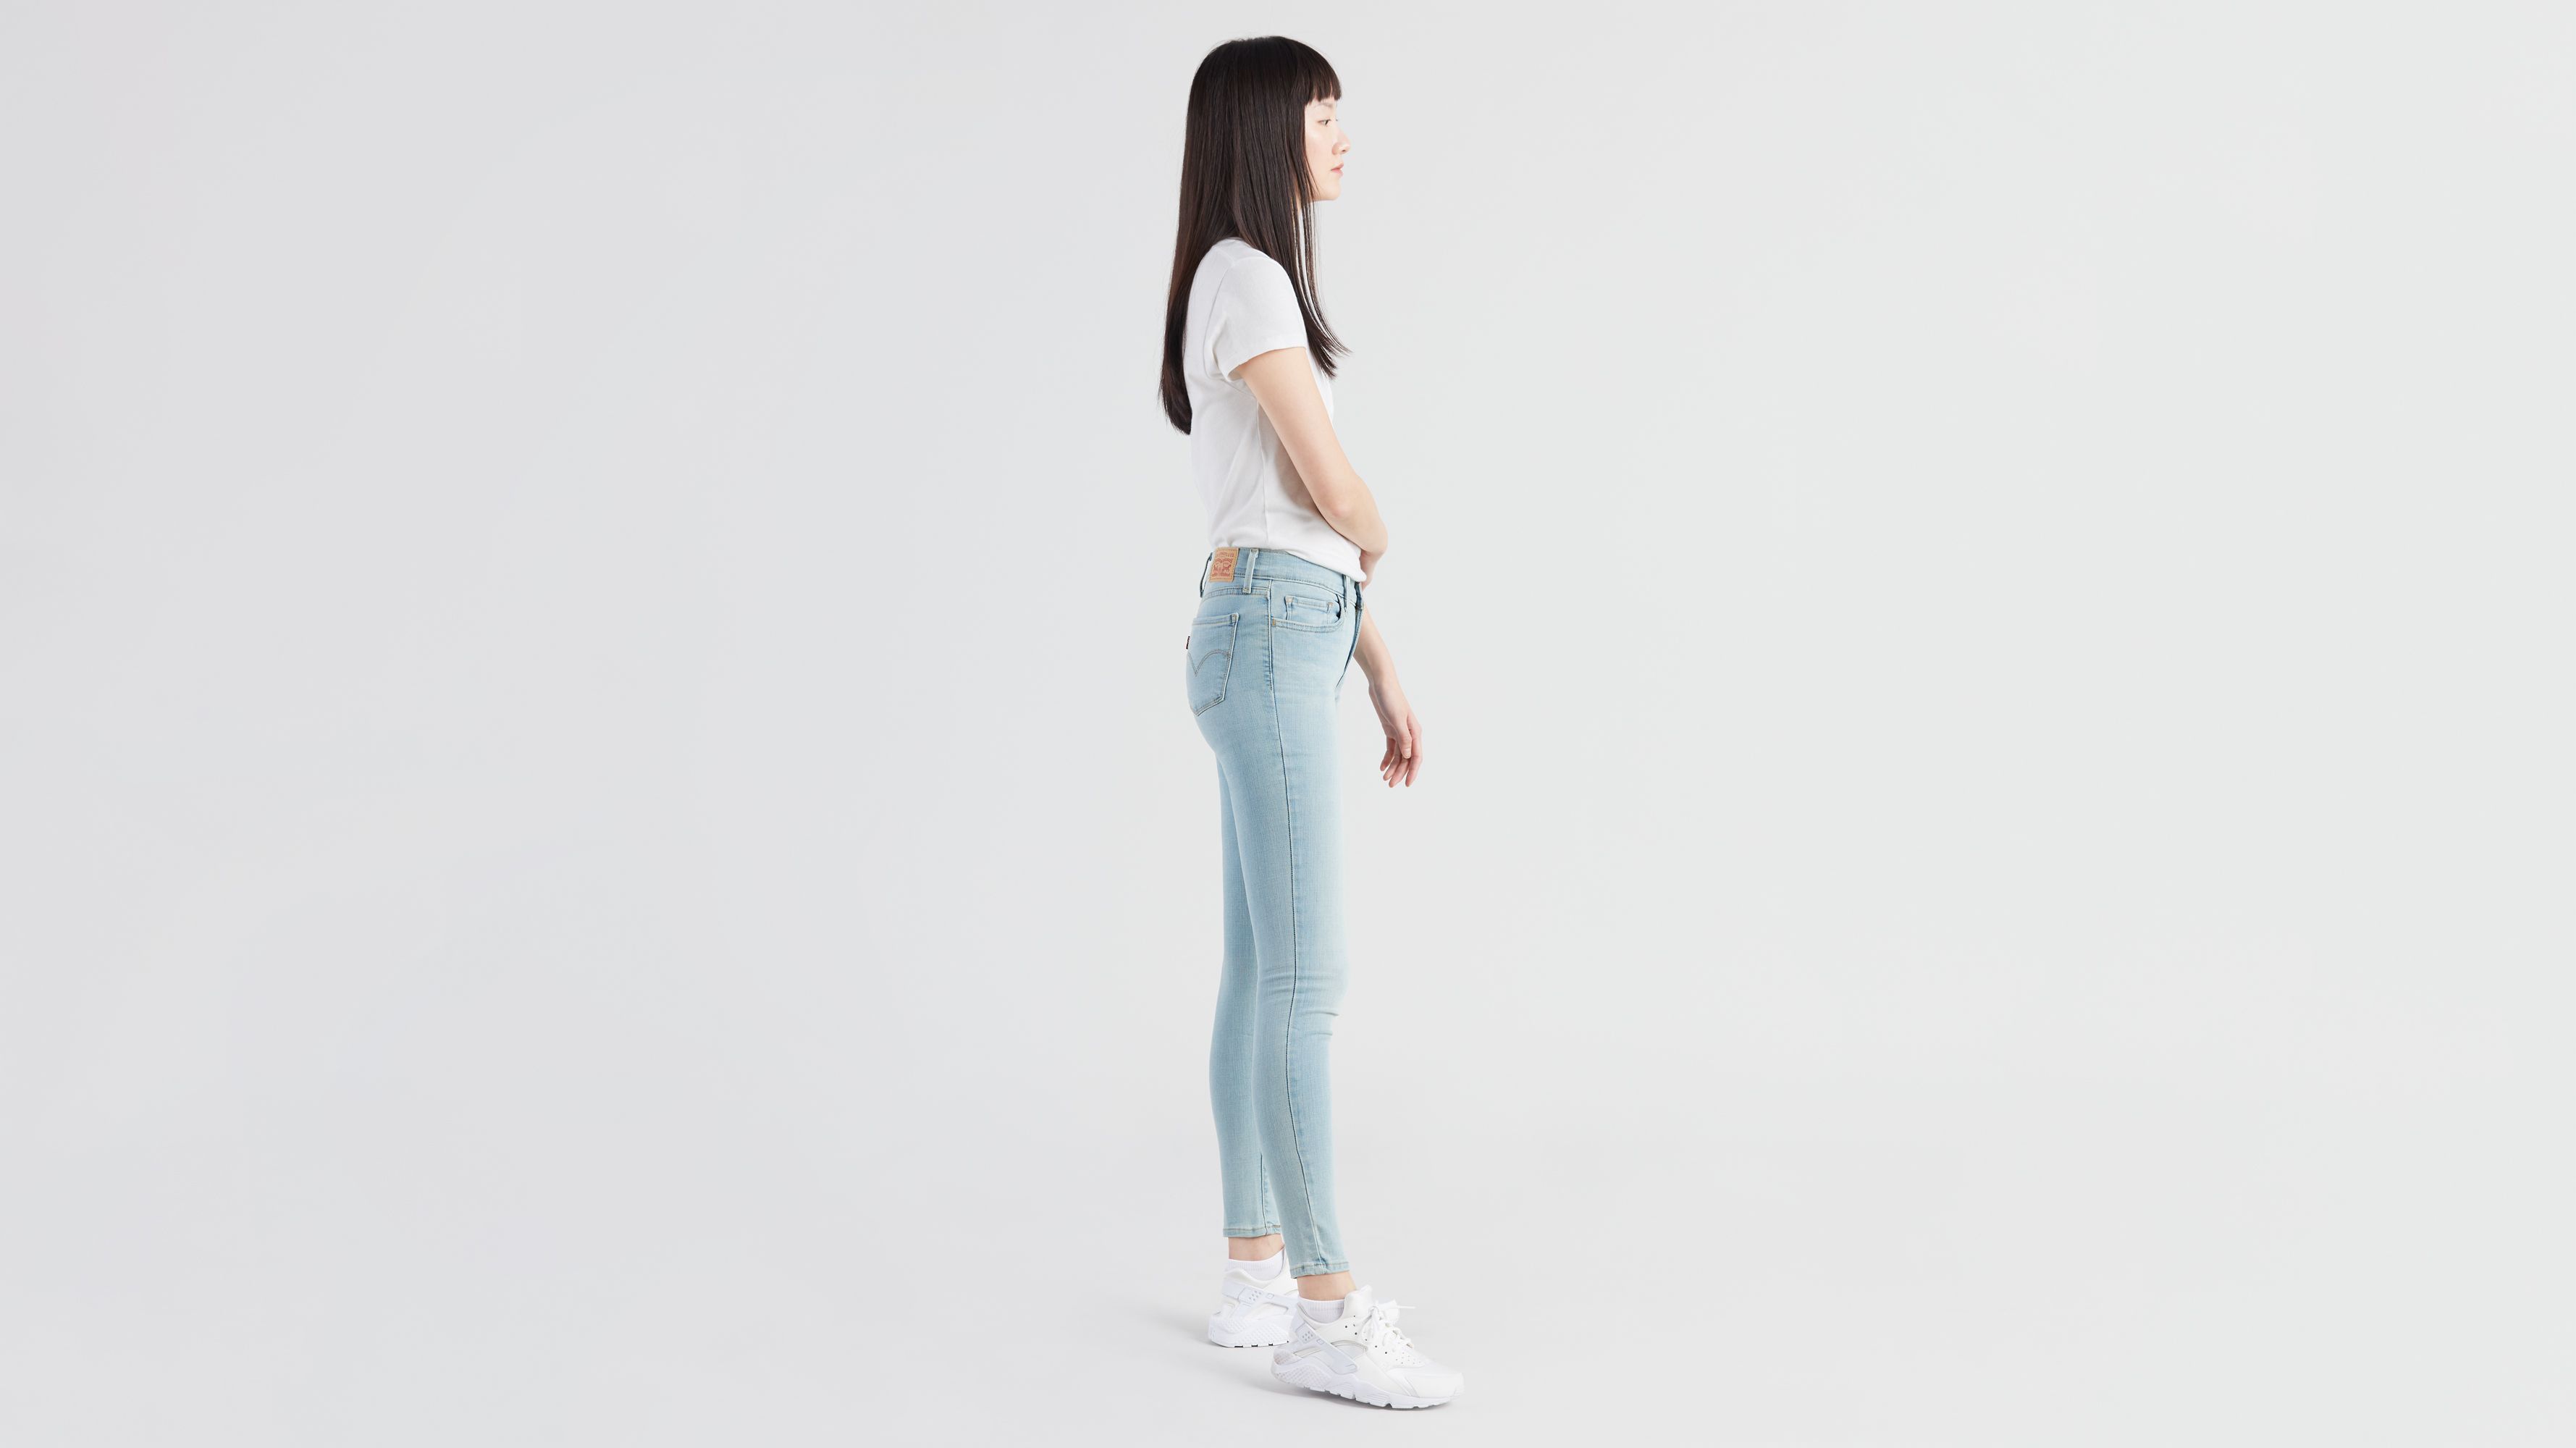 levi's 710 womens jeans